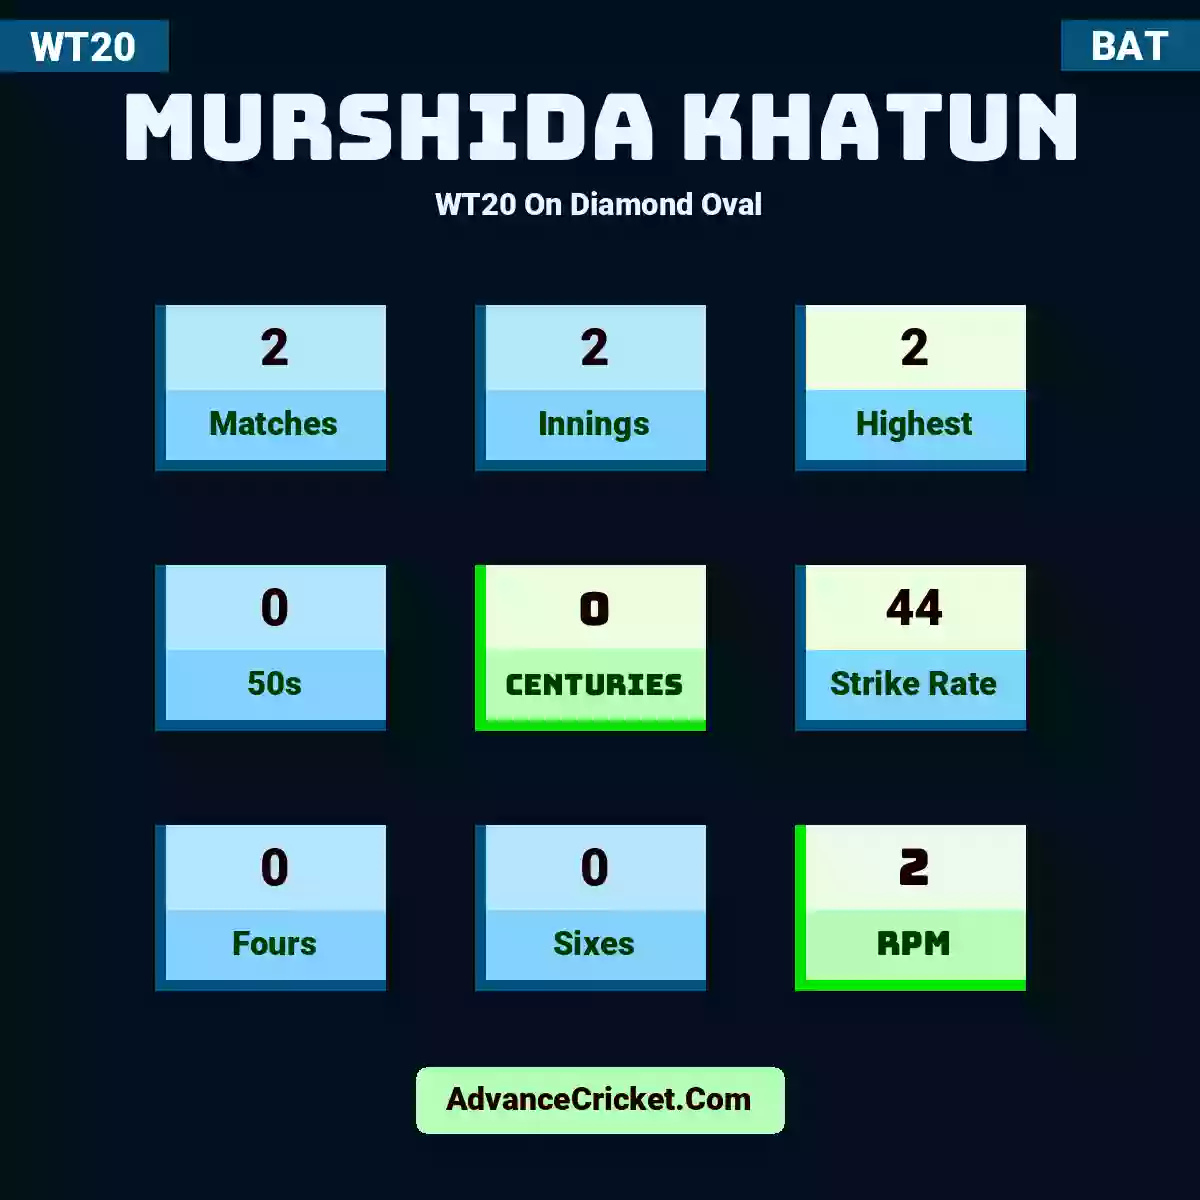 Murshida Khatun WT20  On Diamond Oval, Murshida Khatun played 2 matches, scored 2 runs as highest, 0 half-centuries, and 0 centuries, with a strike rate of 44. M.Khatun hit 0 fours and 0 sixes, with an RPM of 2.